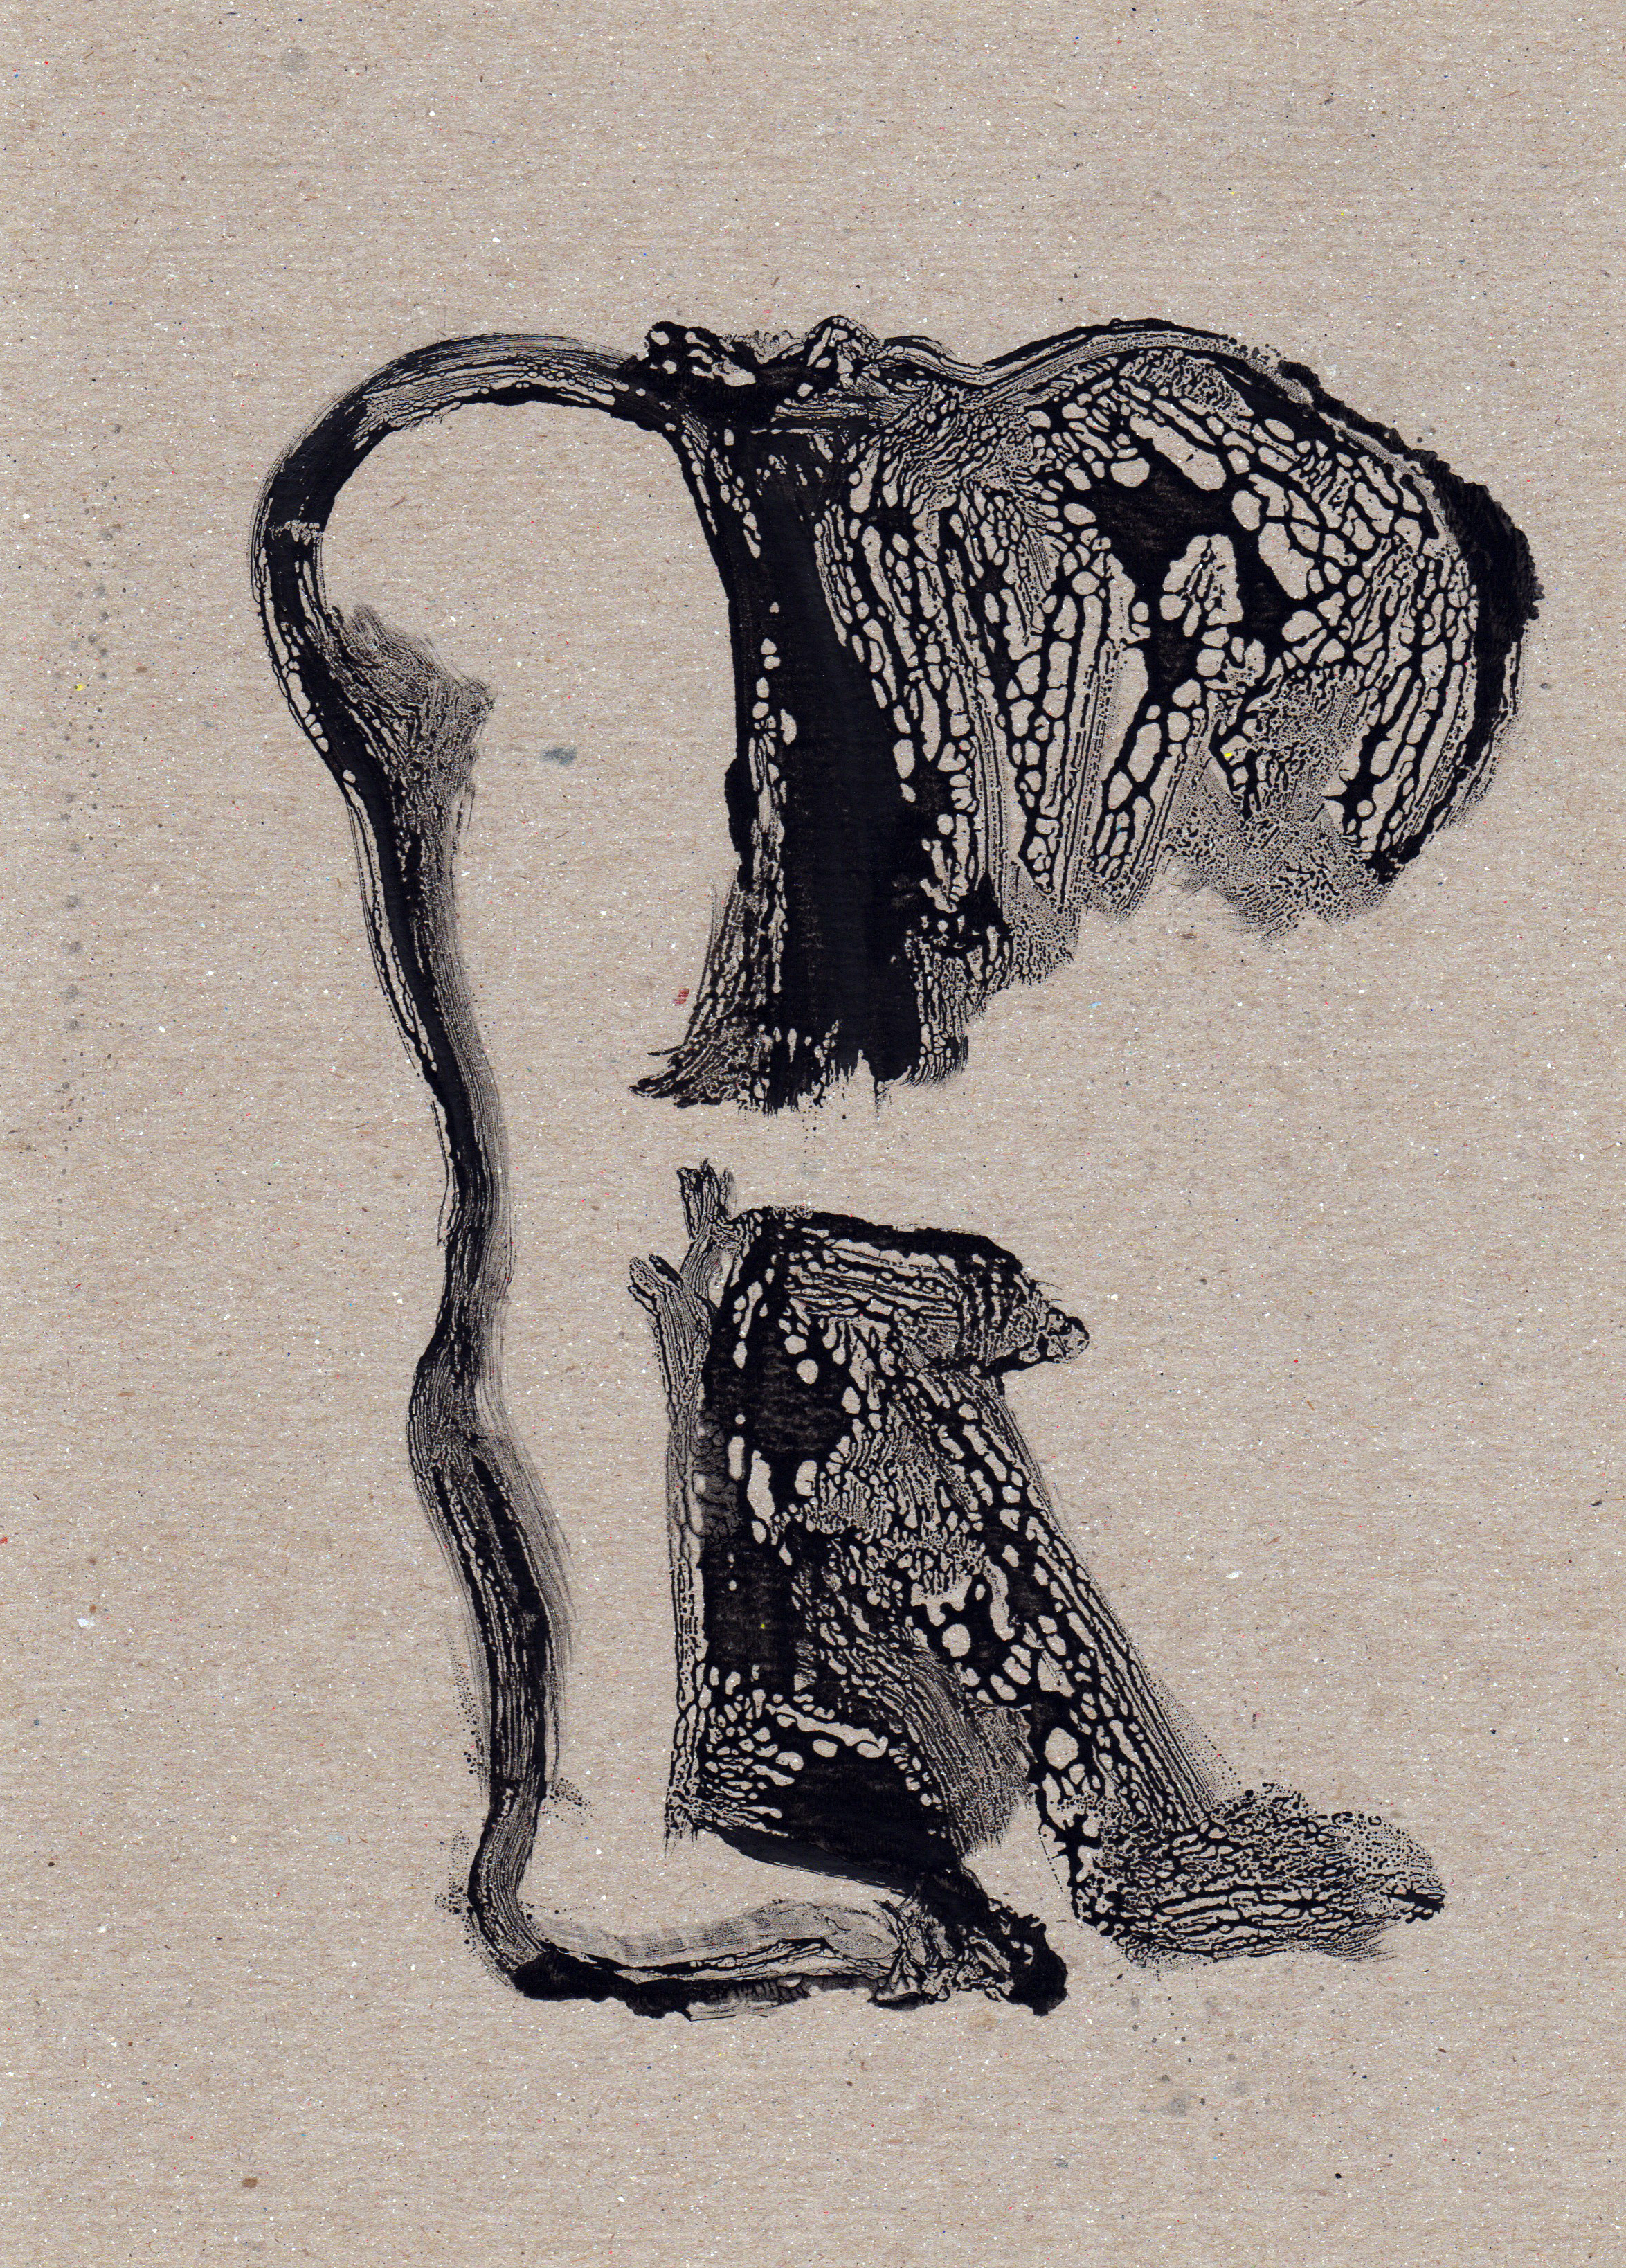 Untitled Revealed, 2014, gelatin monotype, 11x8 inches